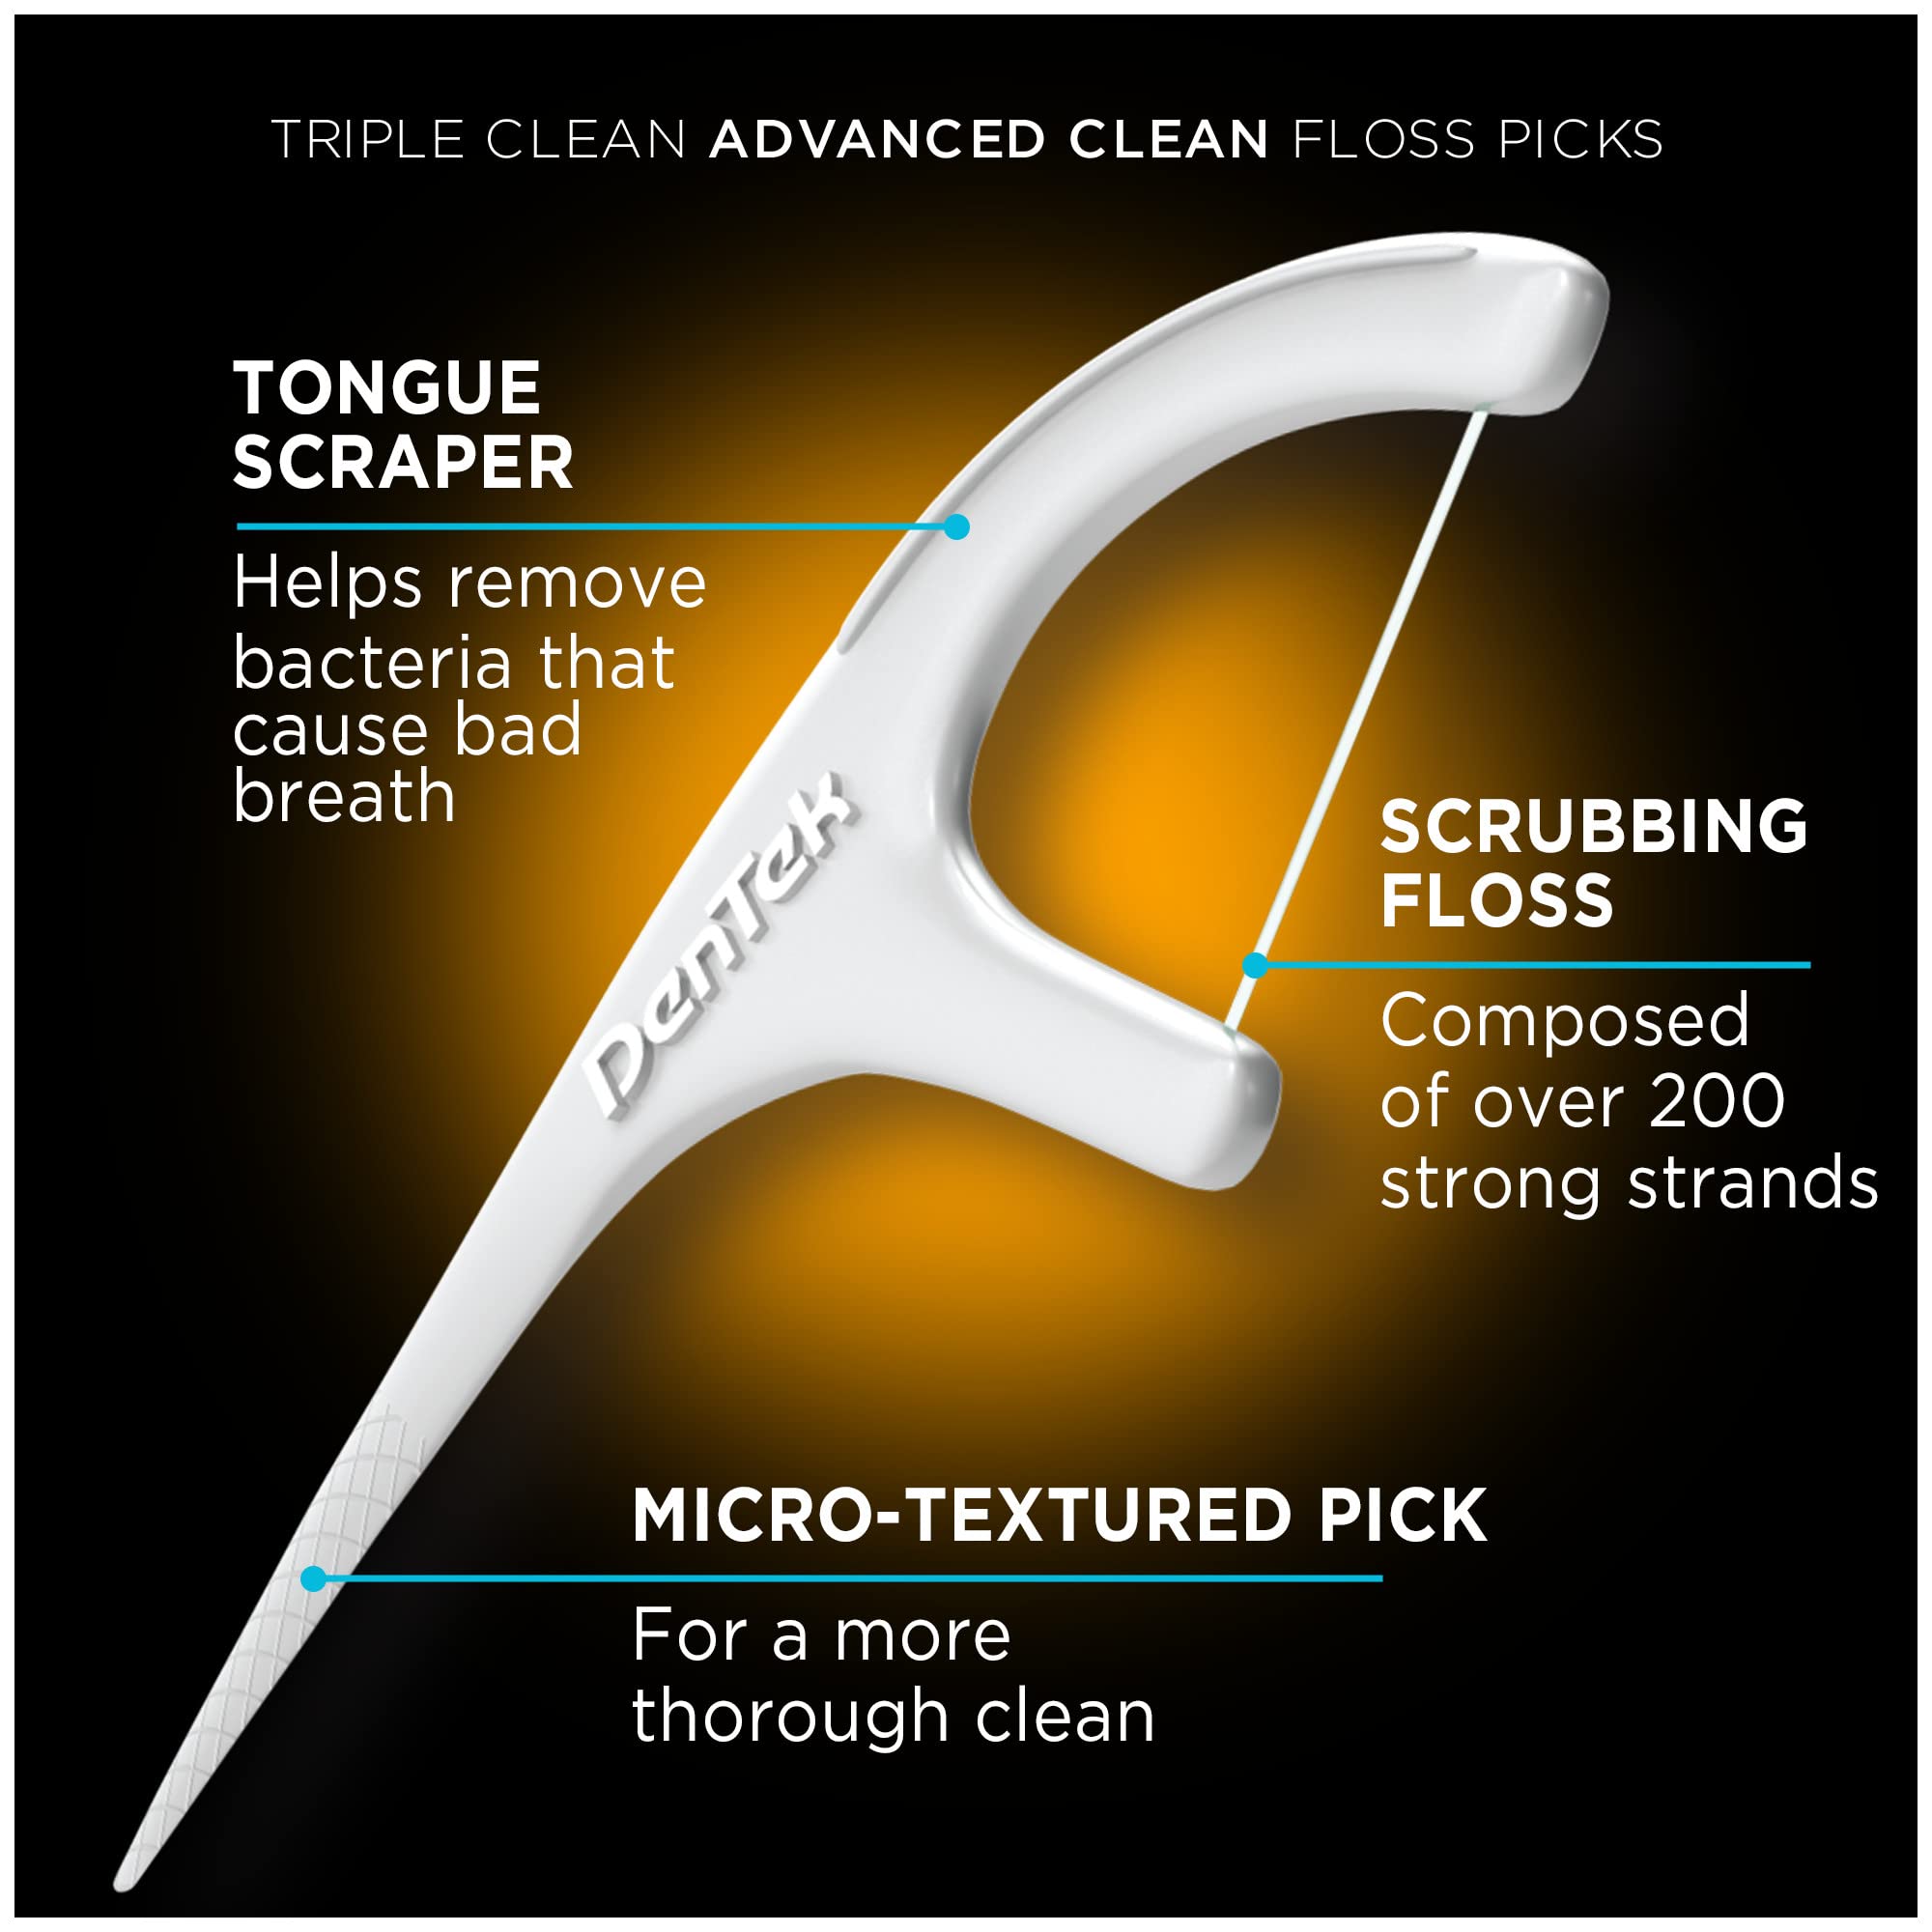 DenTek Triple Clean Advanced Clean Floss Picks, No Break & No Shred Floss, 150 Count, Pack of 3